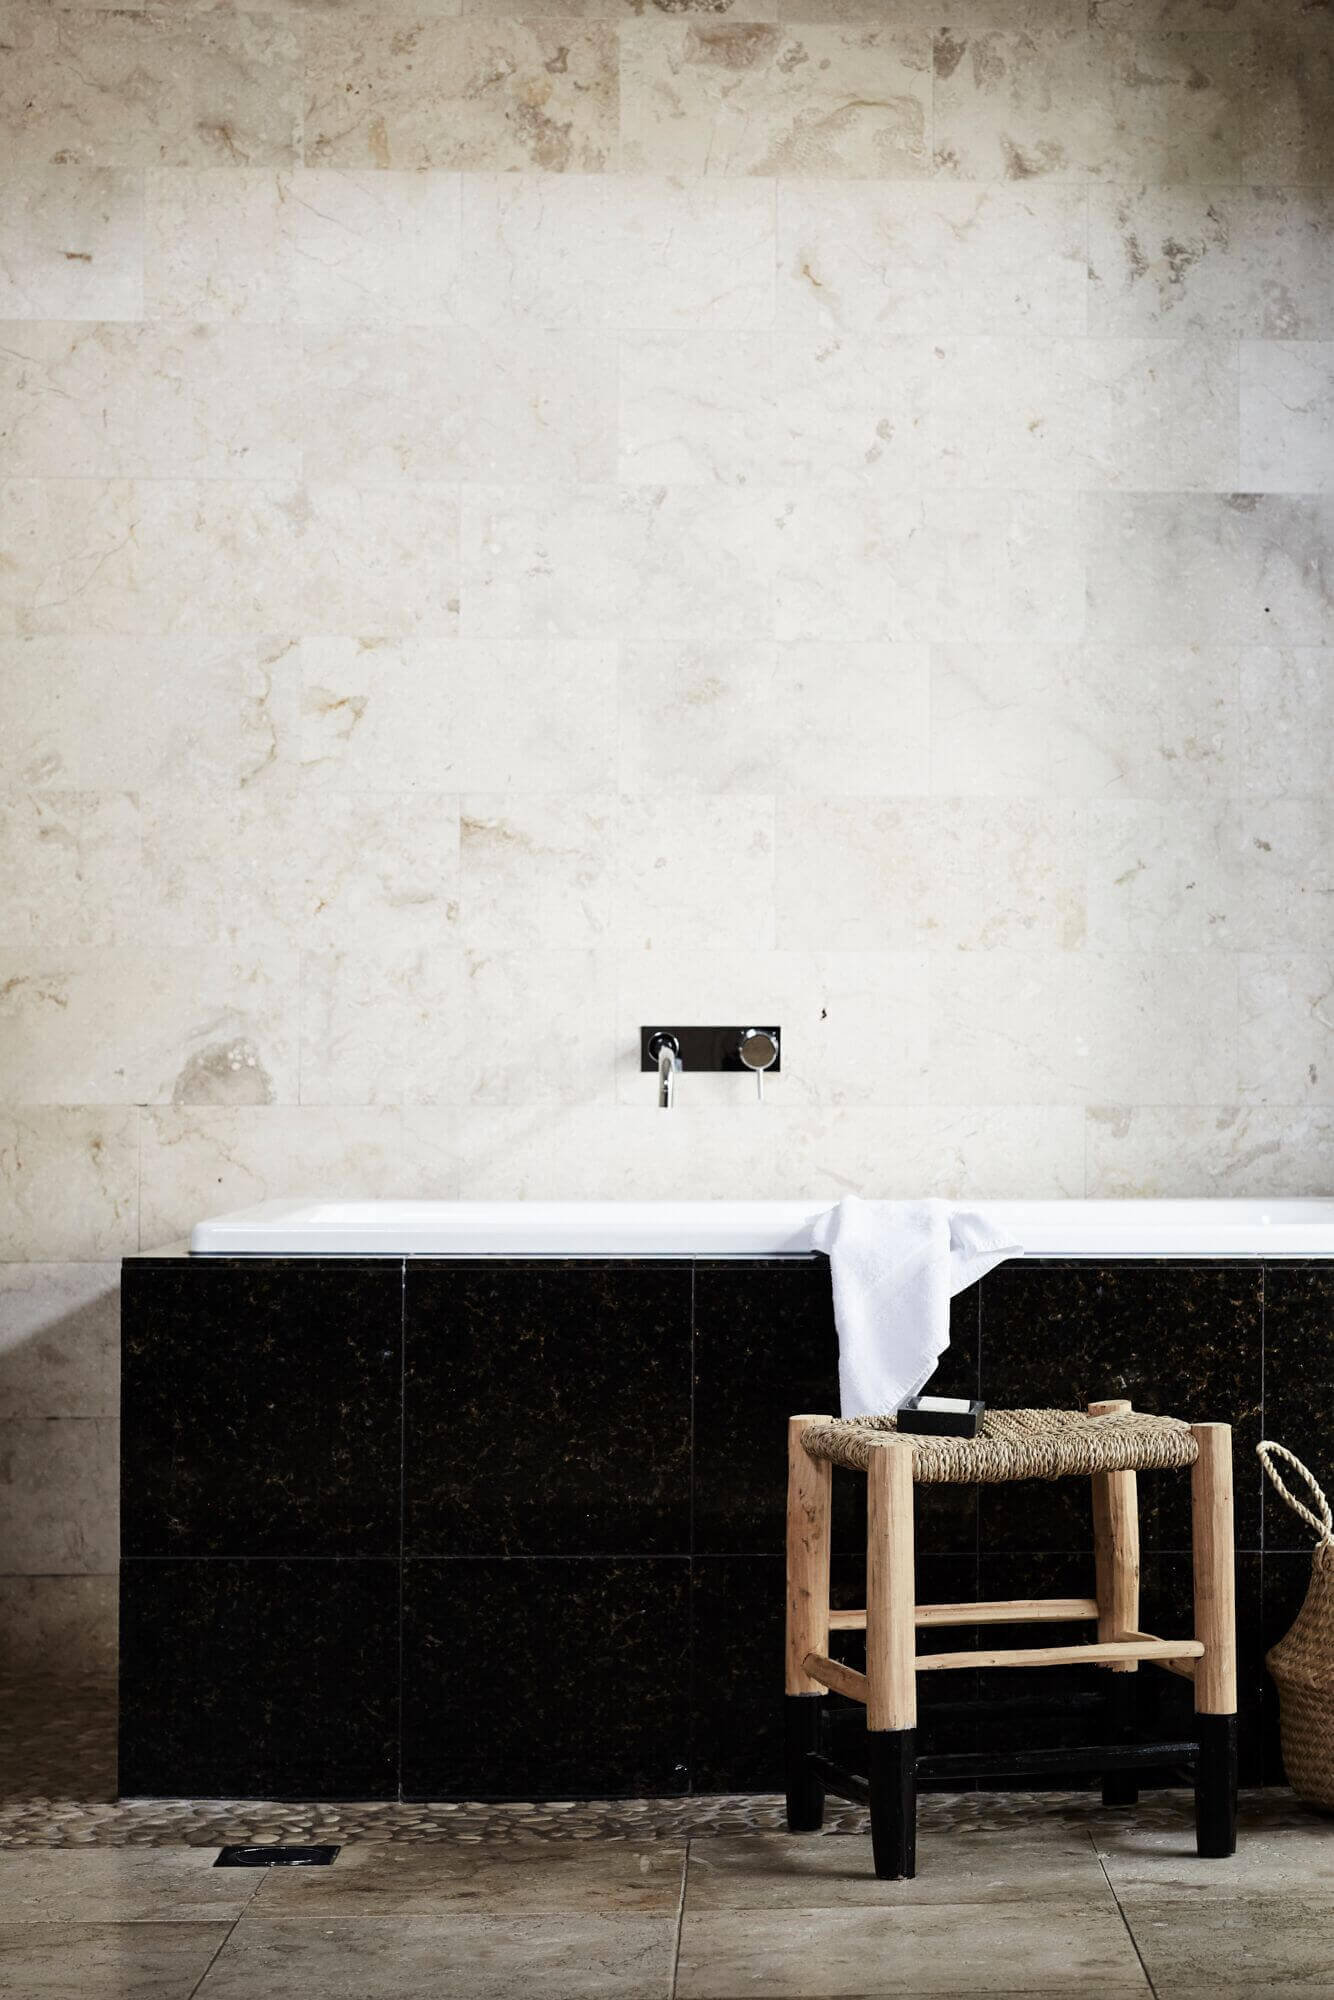 Japanese soaking tub with marble tiled walls at The Villas of Byron